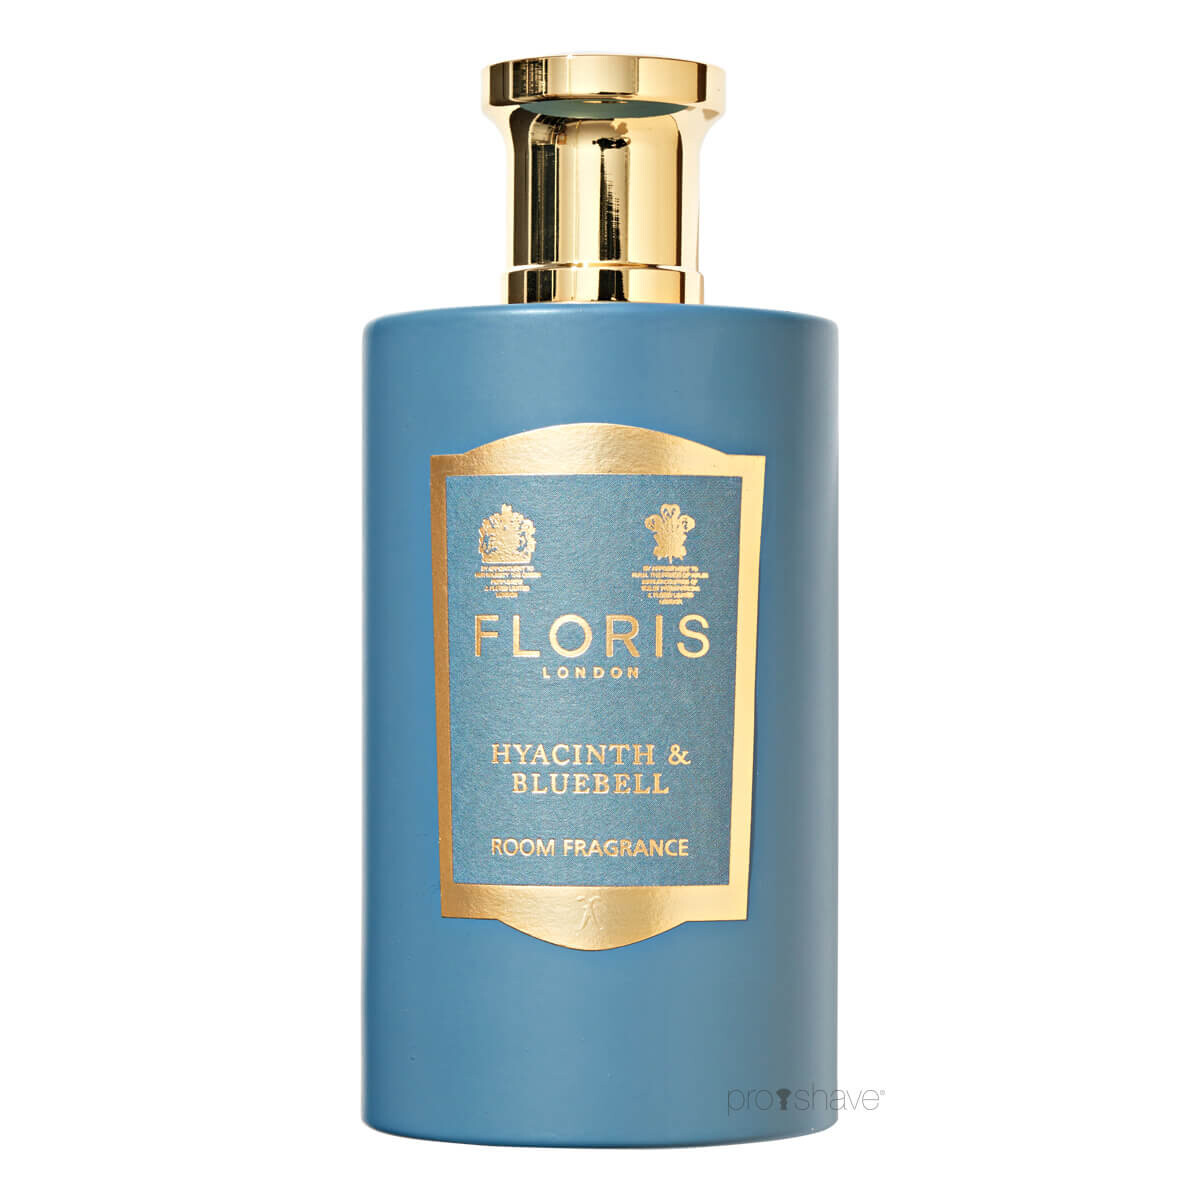 Floris Hyacinth & Bluebell Room Fragrance, 100 ml.